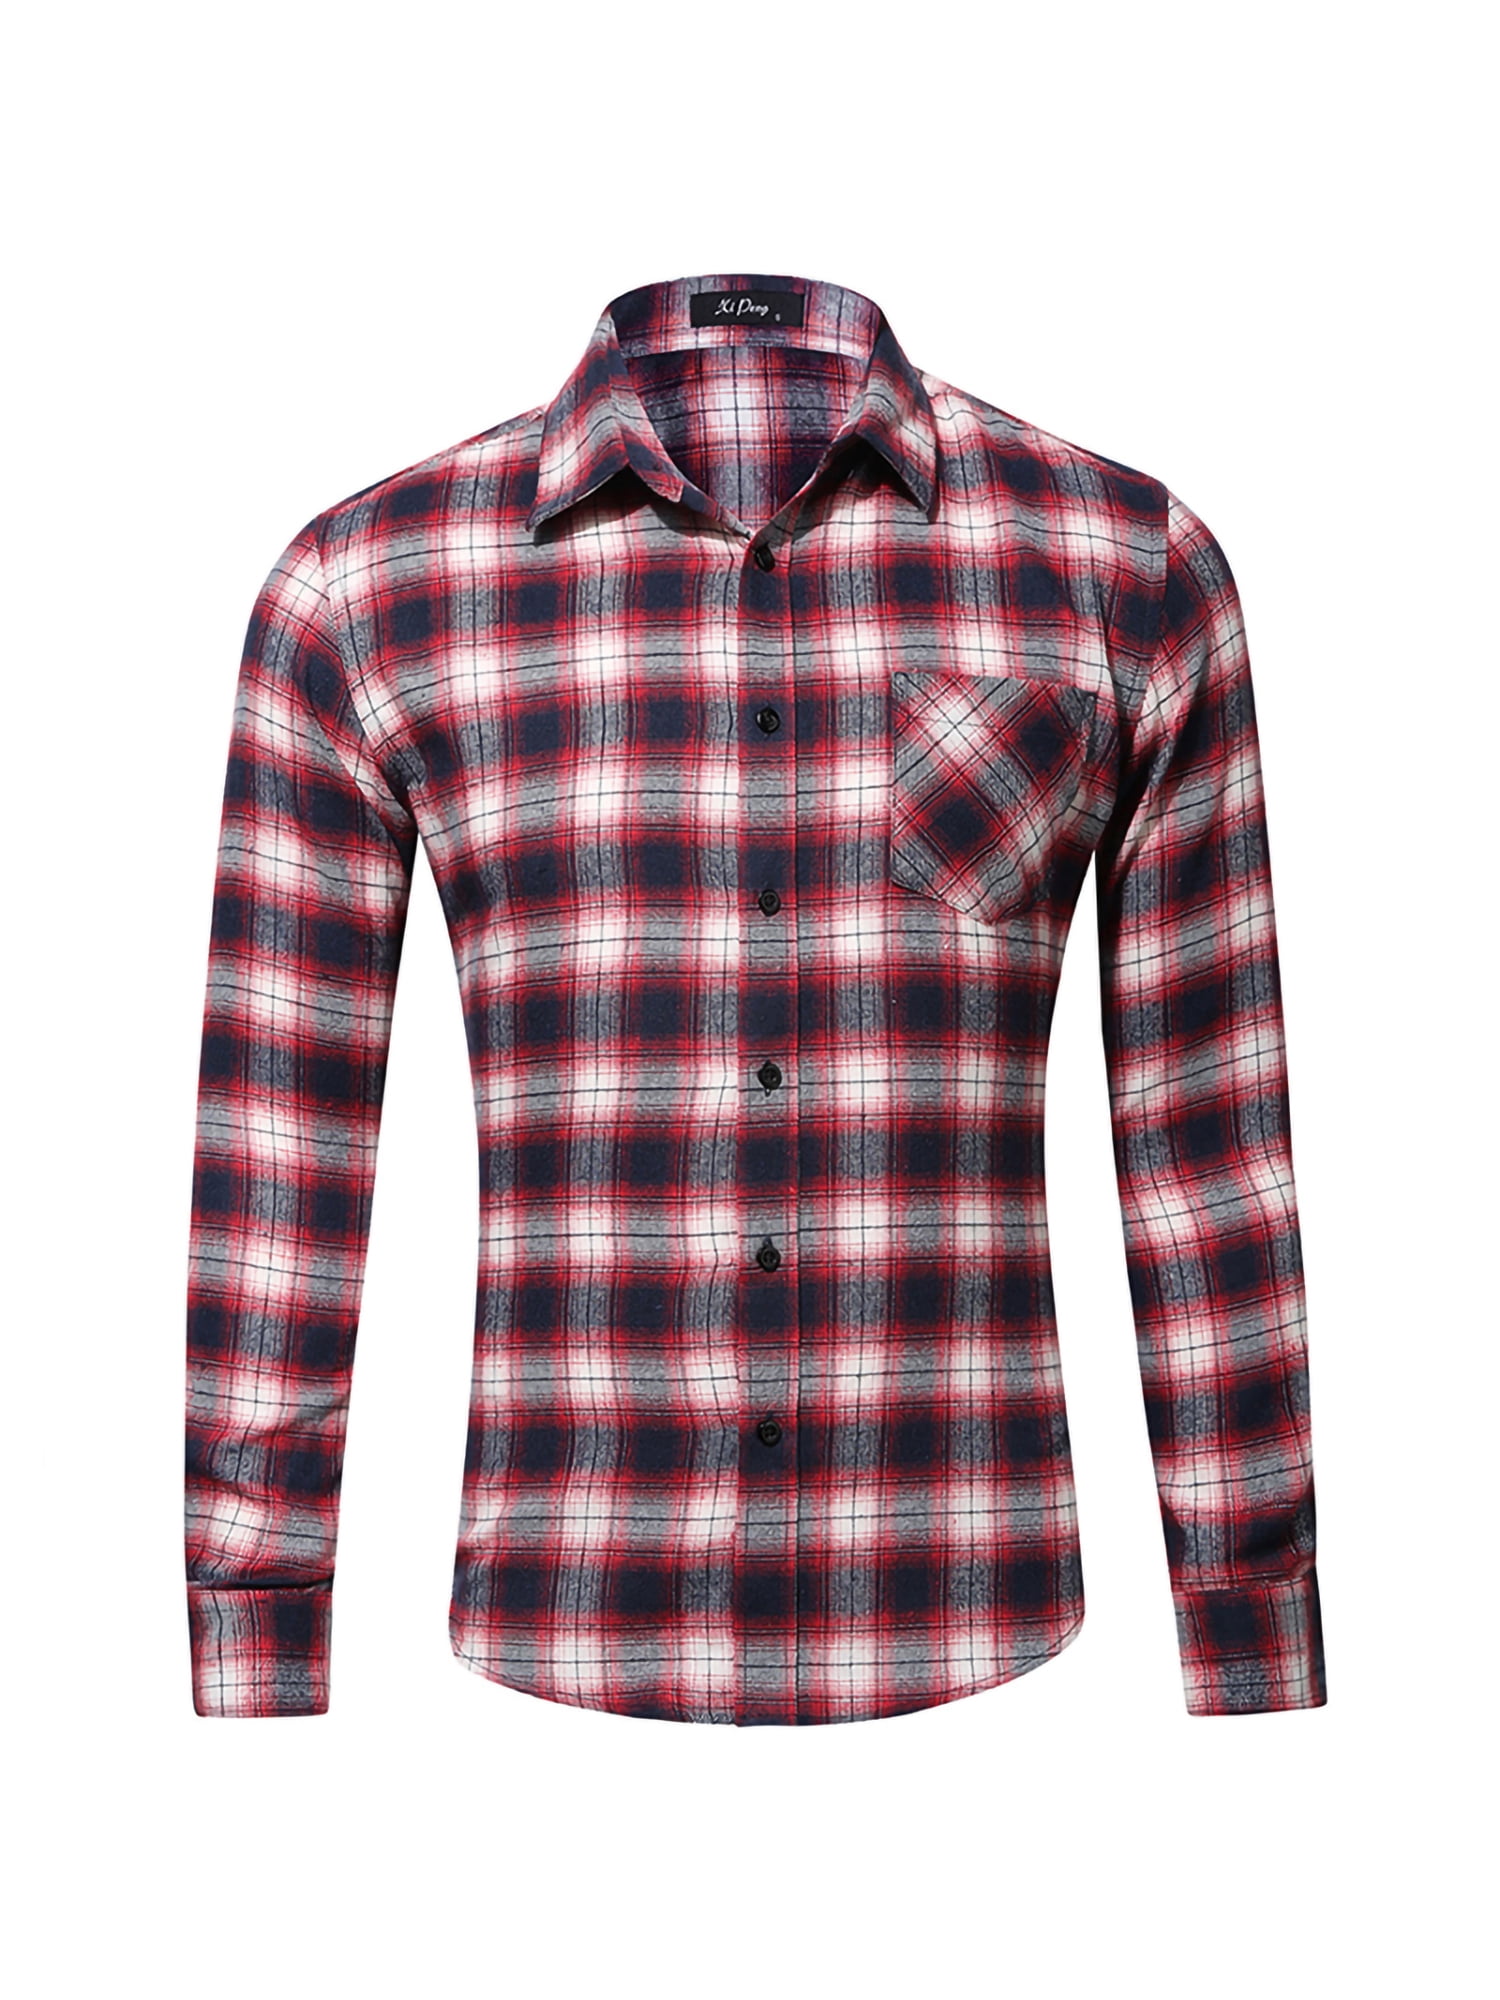 Mens Branded Firetrap Casual Stylish Short Sleeve Cotton Oxford Shirt Top S-XXL 